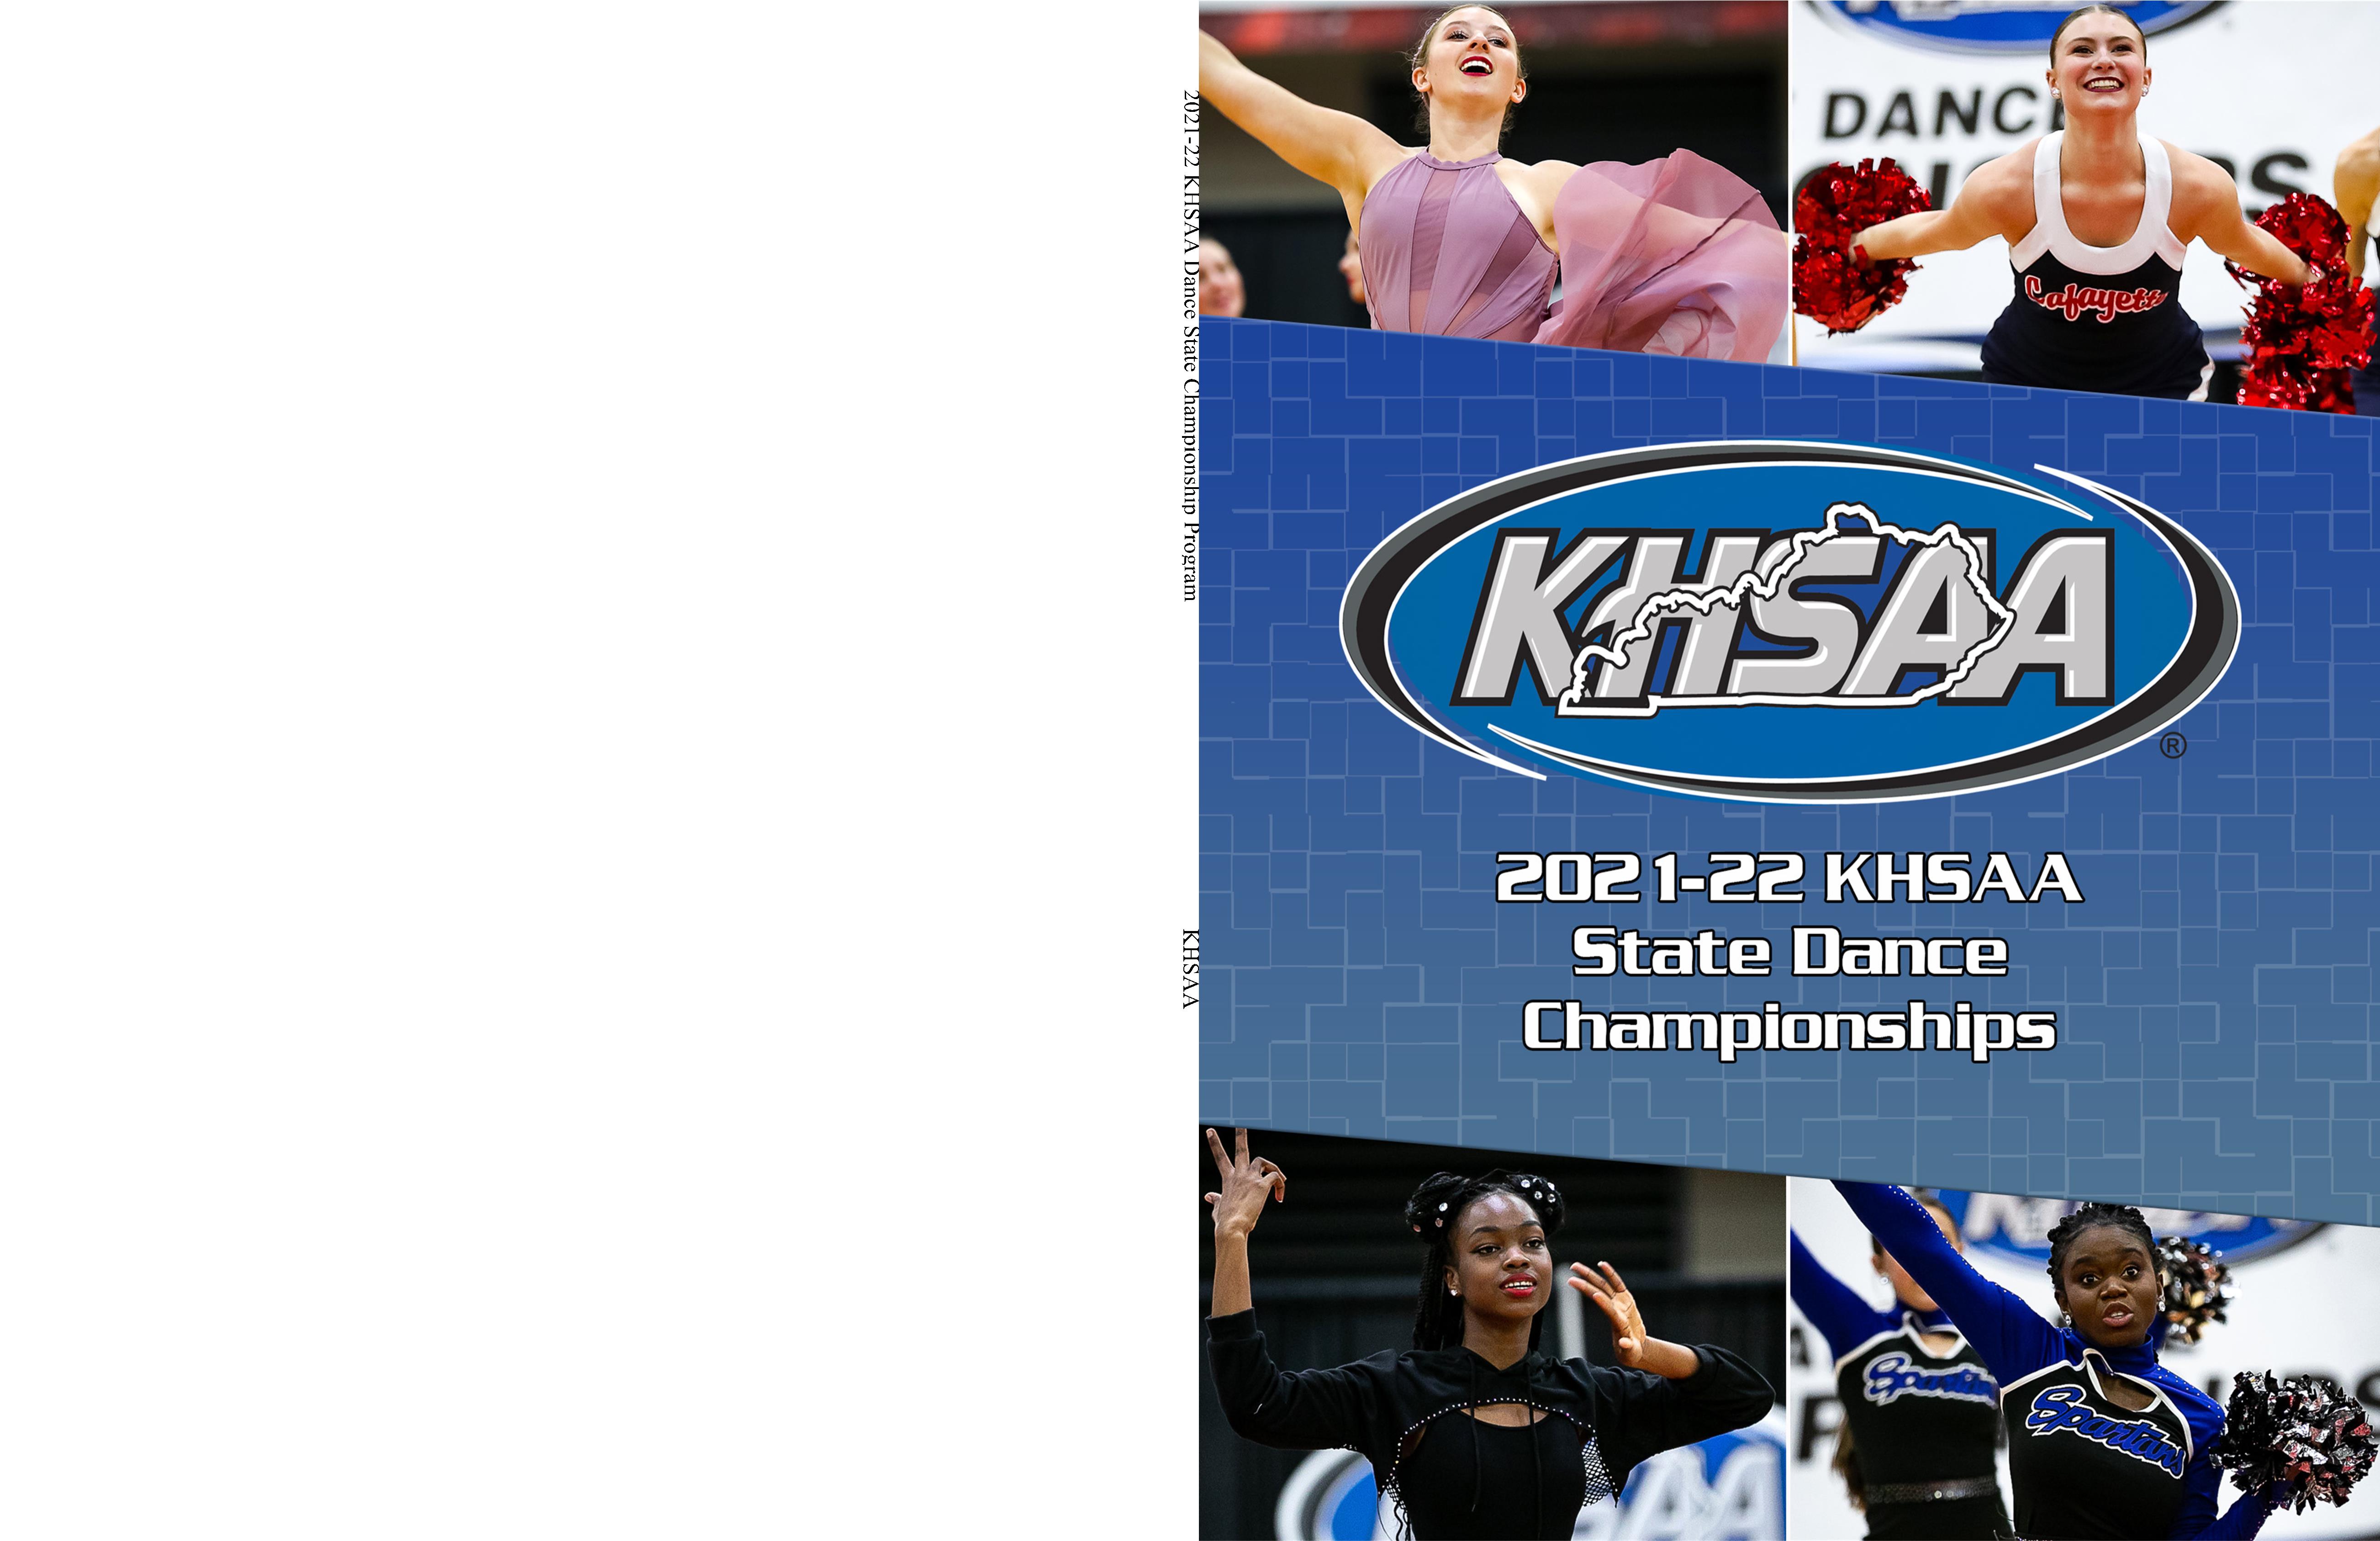 2021-22 KHSAA Dance State Championship Program cover image